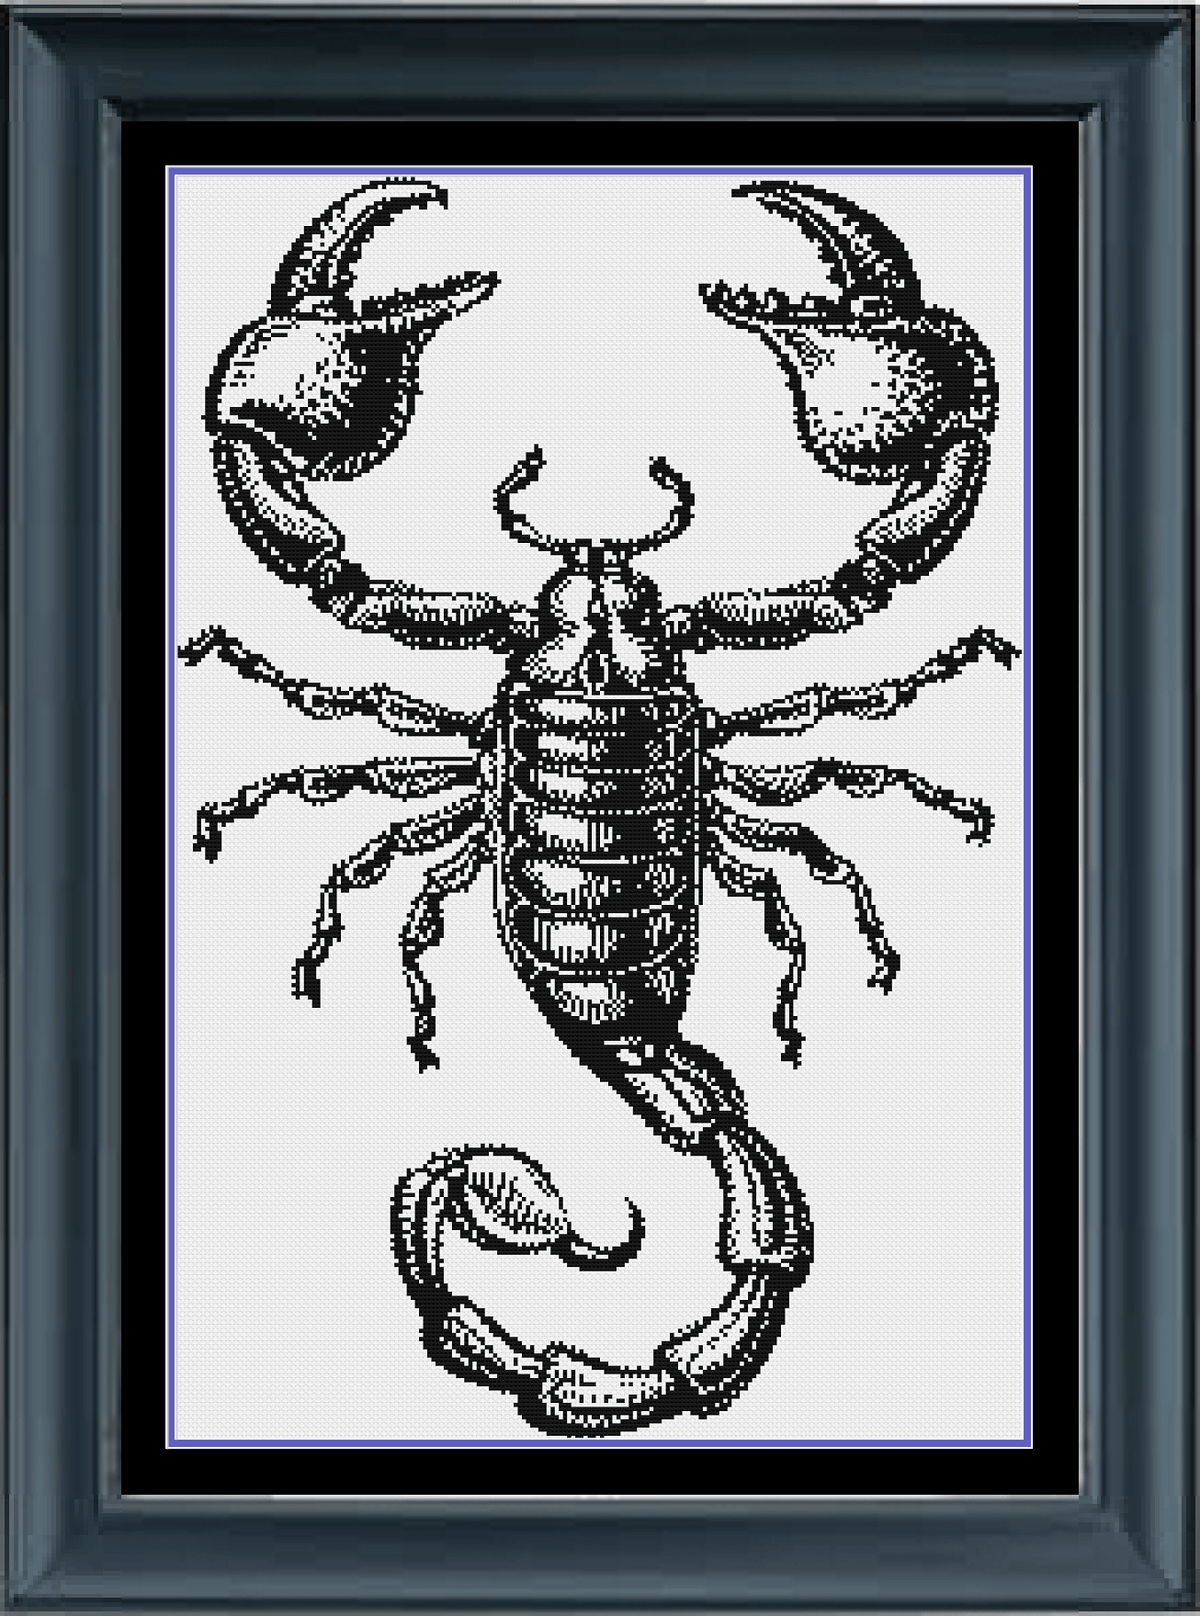 Stitching Jules Design Cross Stitch Pattern Digital PDF Download - $10 Scorpion Monochrome Blackwork Cross Stitch Pattern | Instant PDF Download And Physical Pattern Options